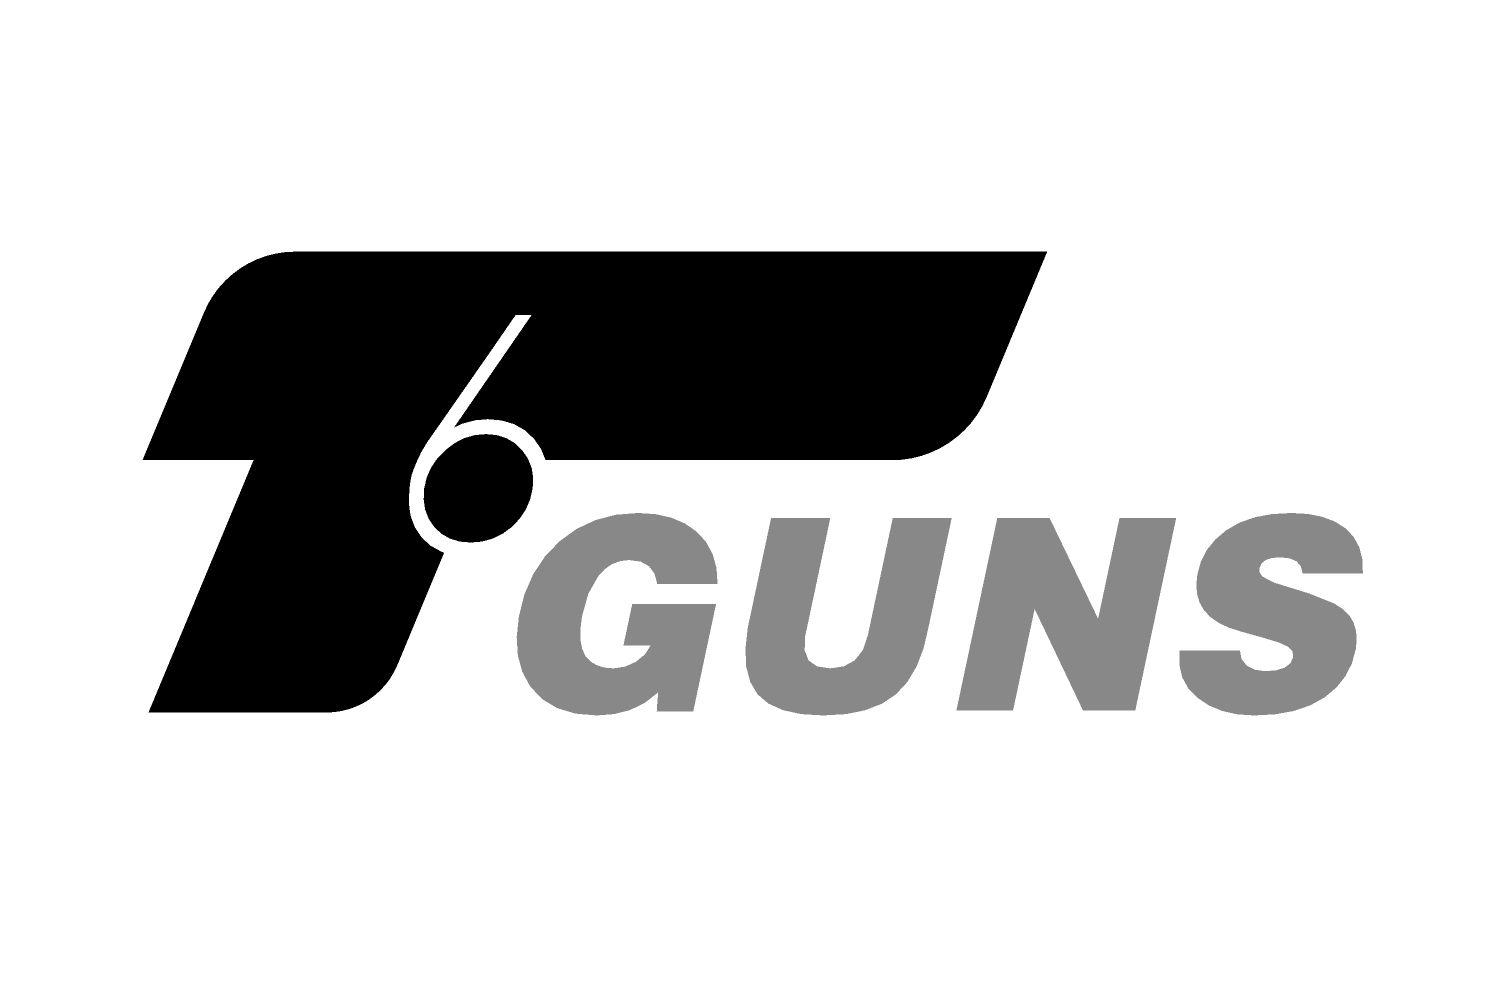 Guns Logo - Bold, Masculine, Gun Logo Design for See description - T 6 Guns ...